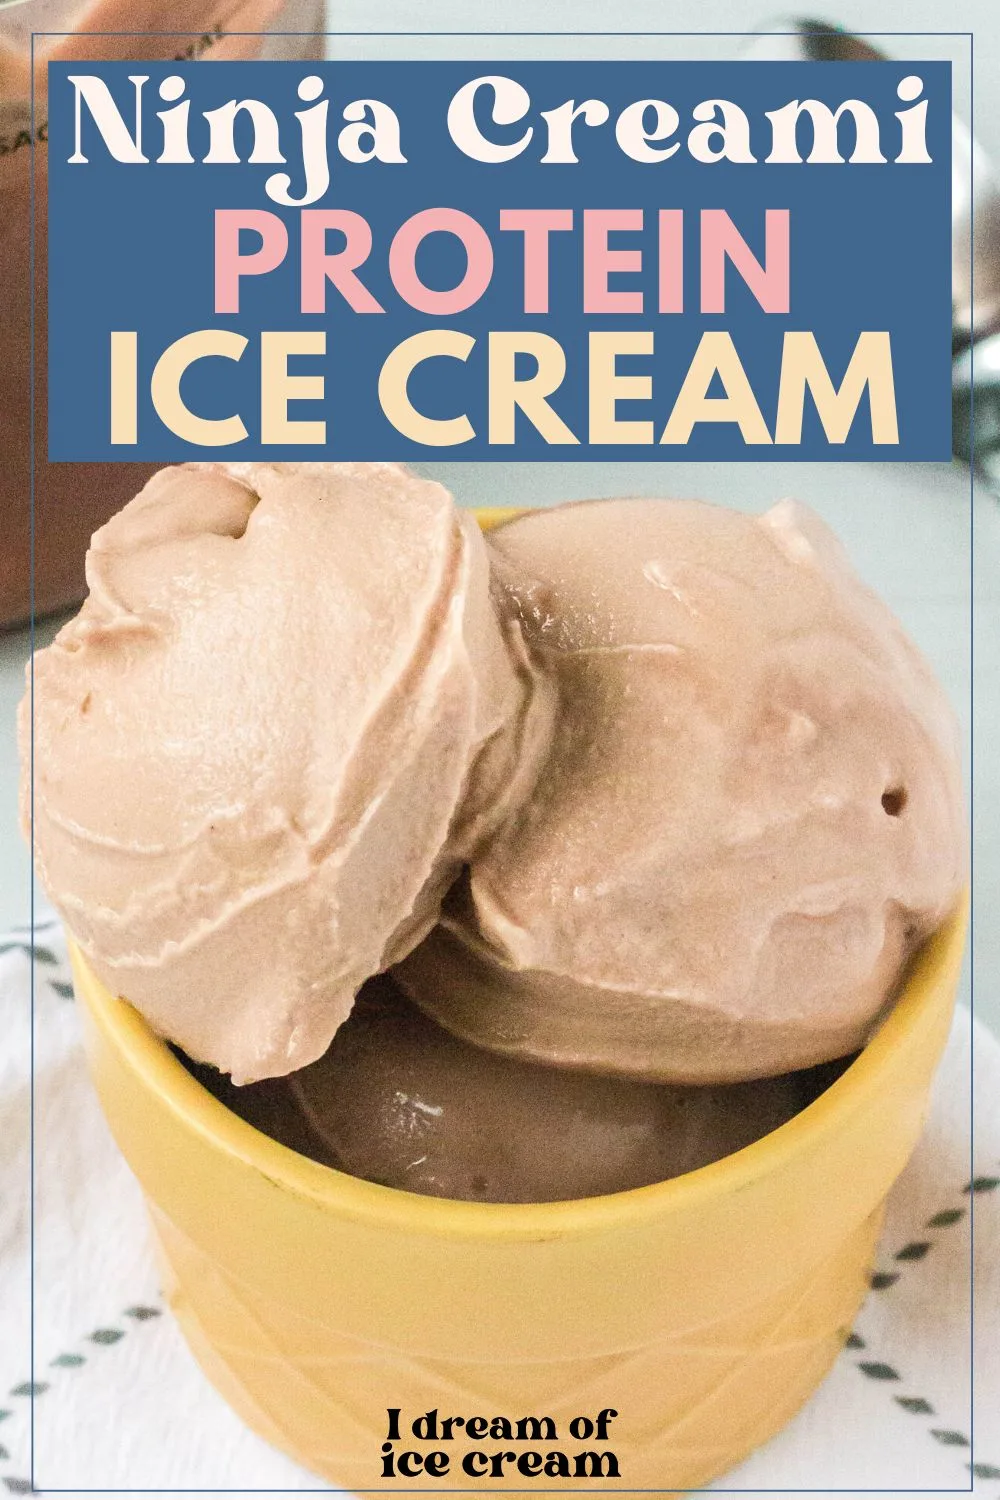 Ninja CREAMi Review: Incredibly Easy Tasty Ice Cream